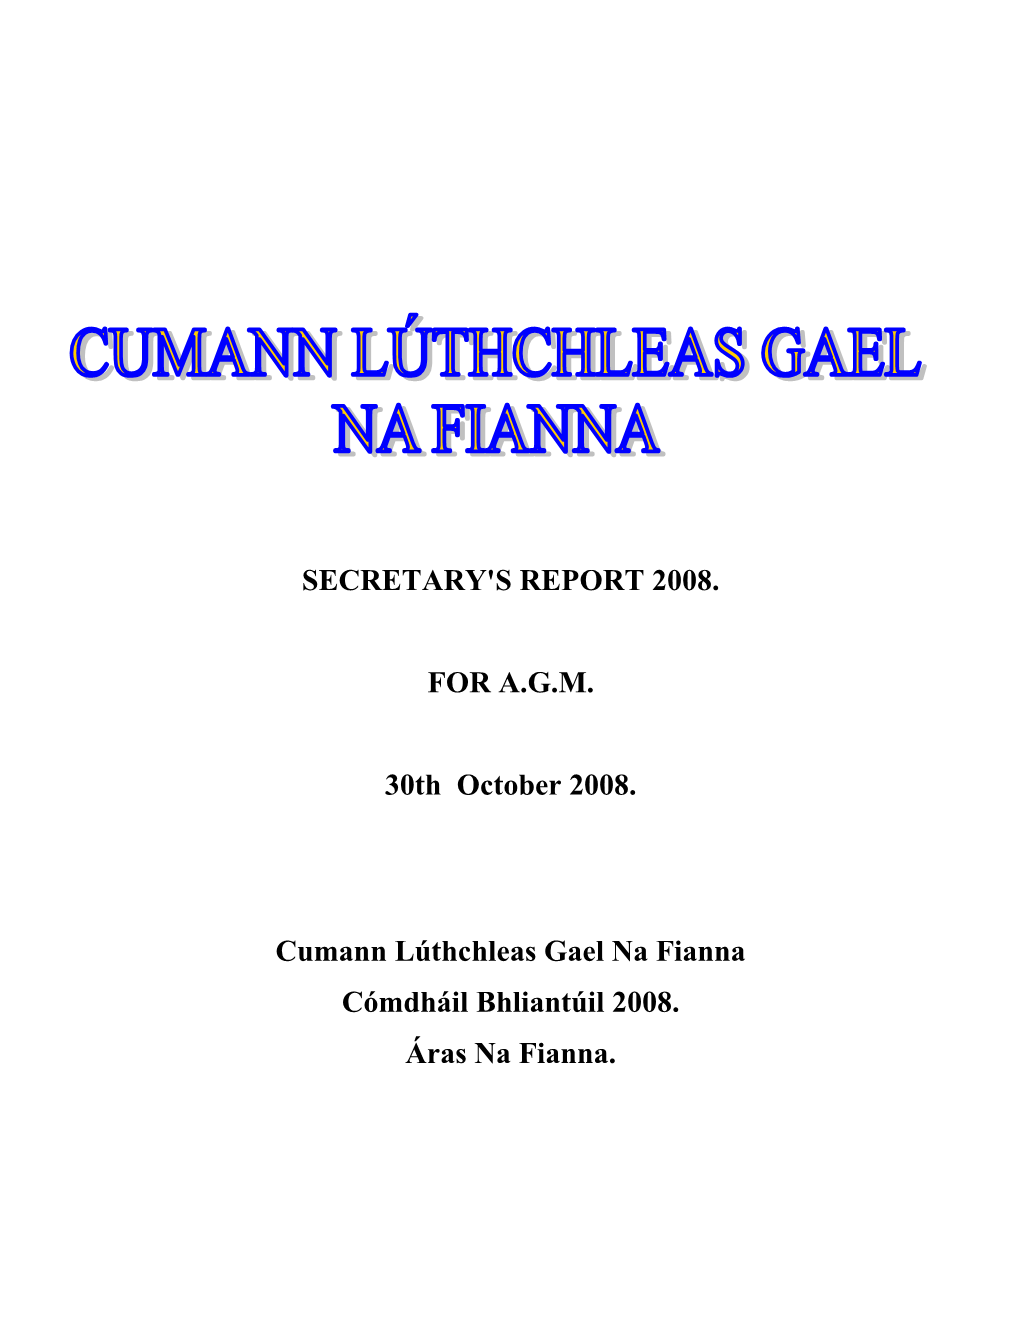 SECRETARY's REPORT 2008. for A.G.M. 30Th October 2008. Cumann